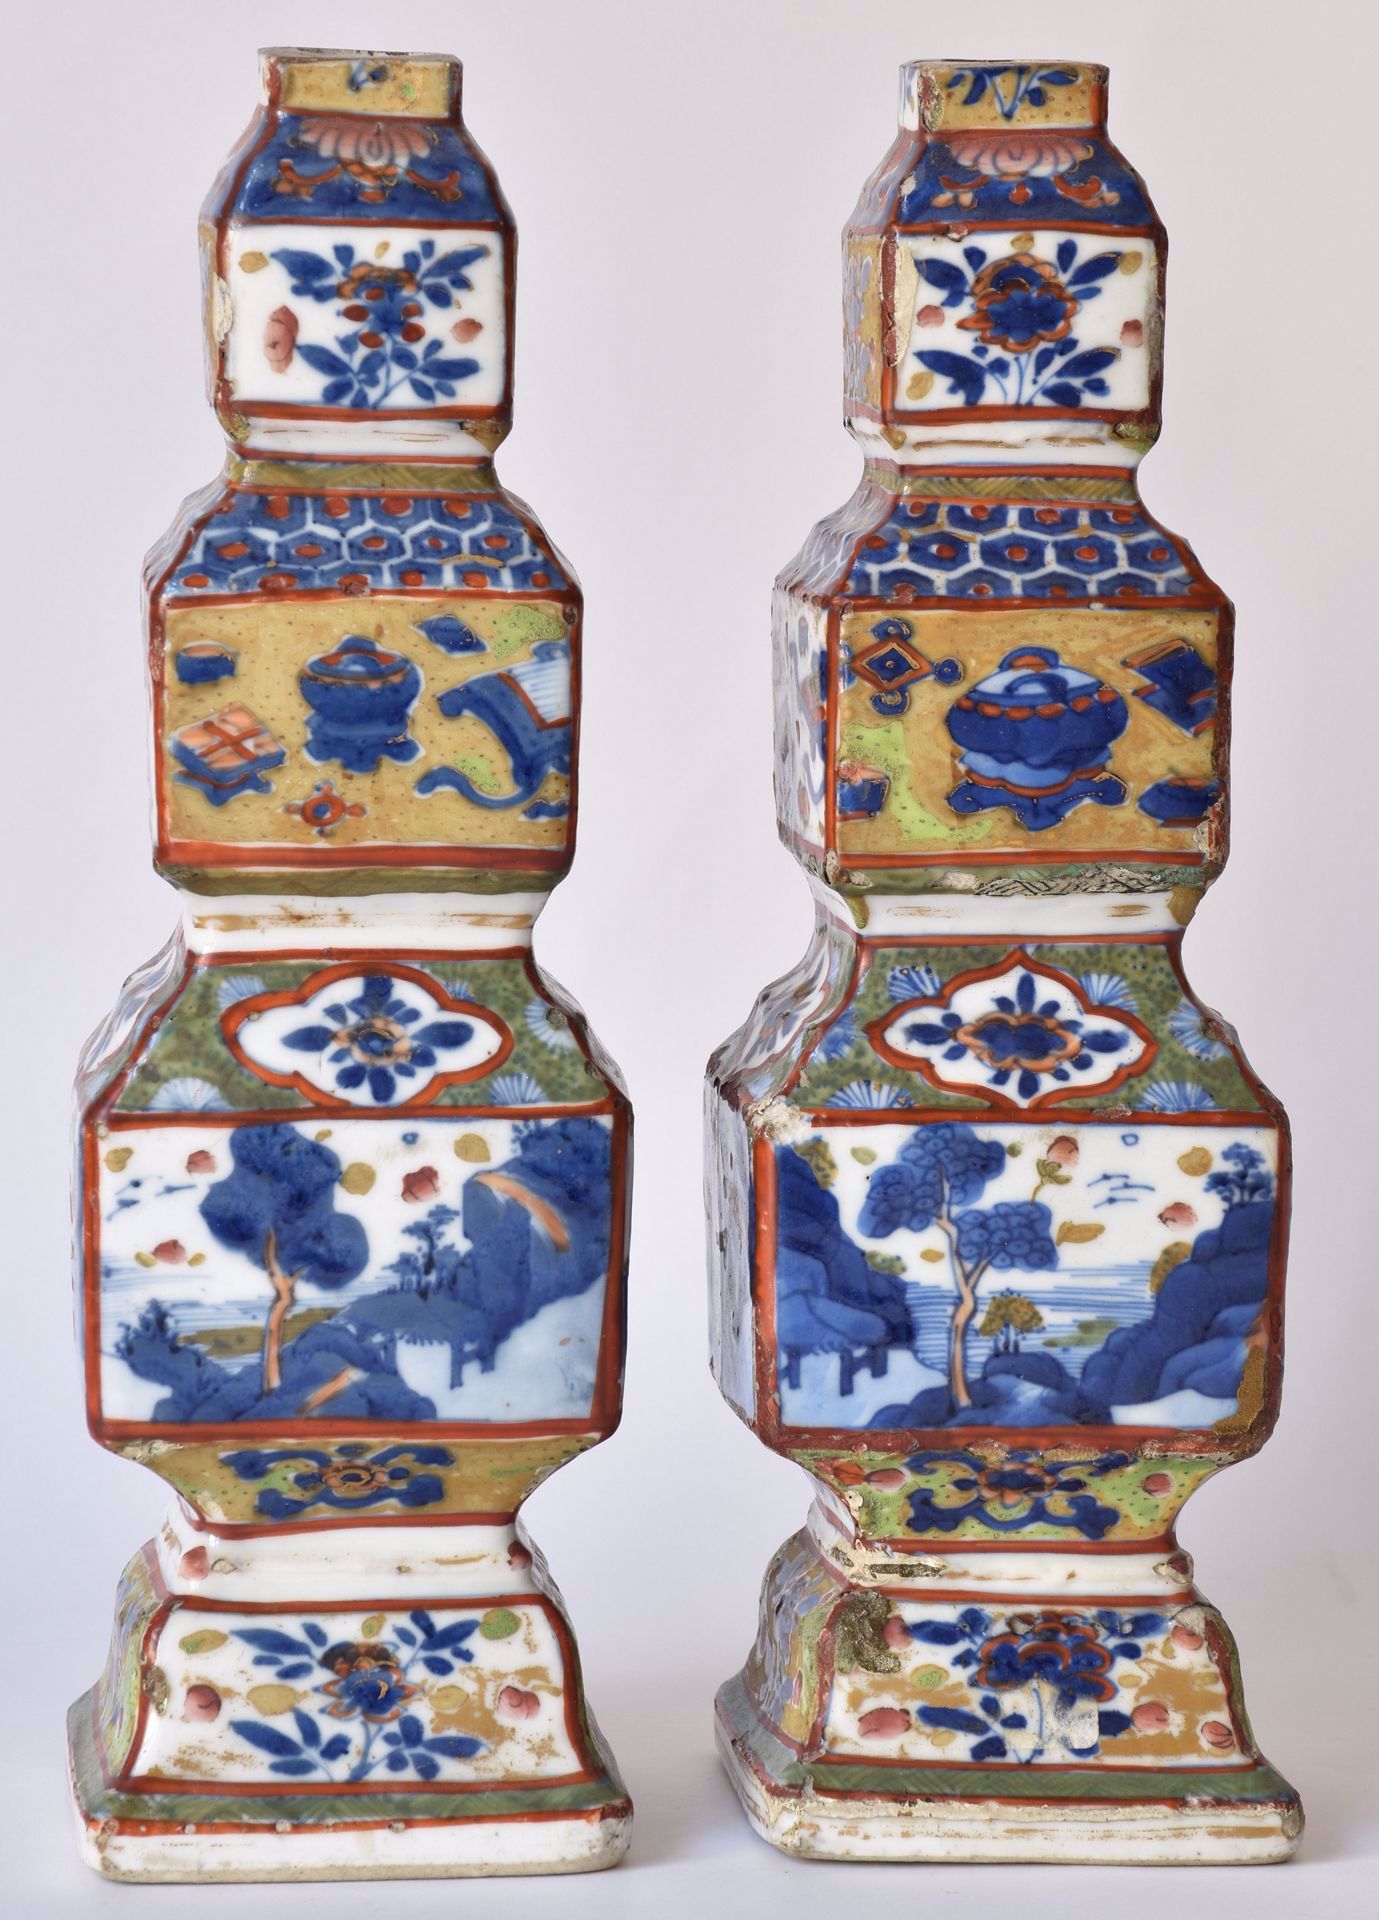 Pair of Miniature Vases 面板上装饰着风景和用品。约1800年。